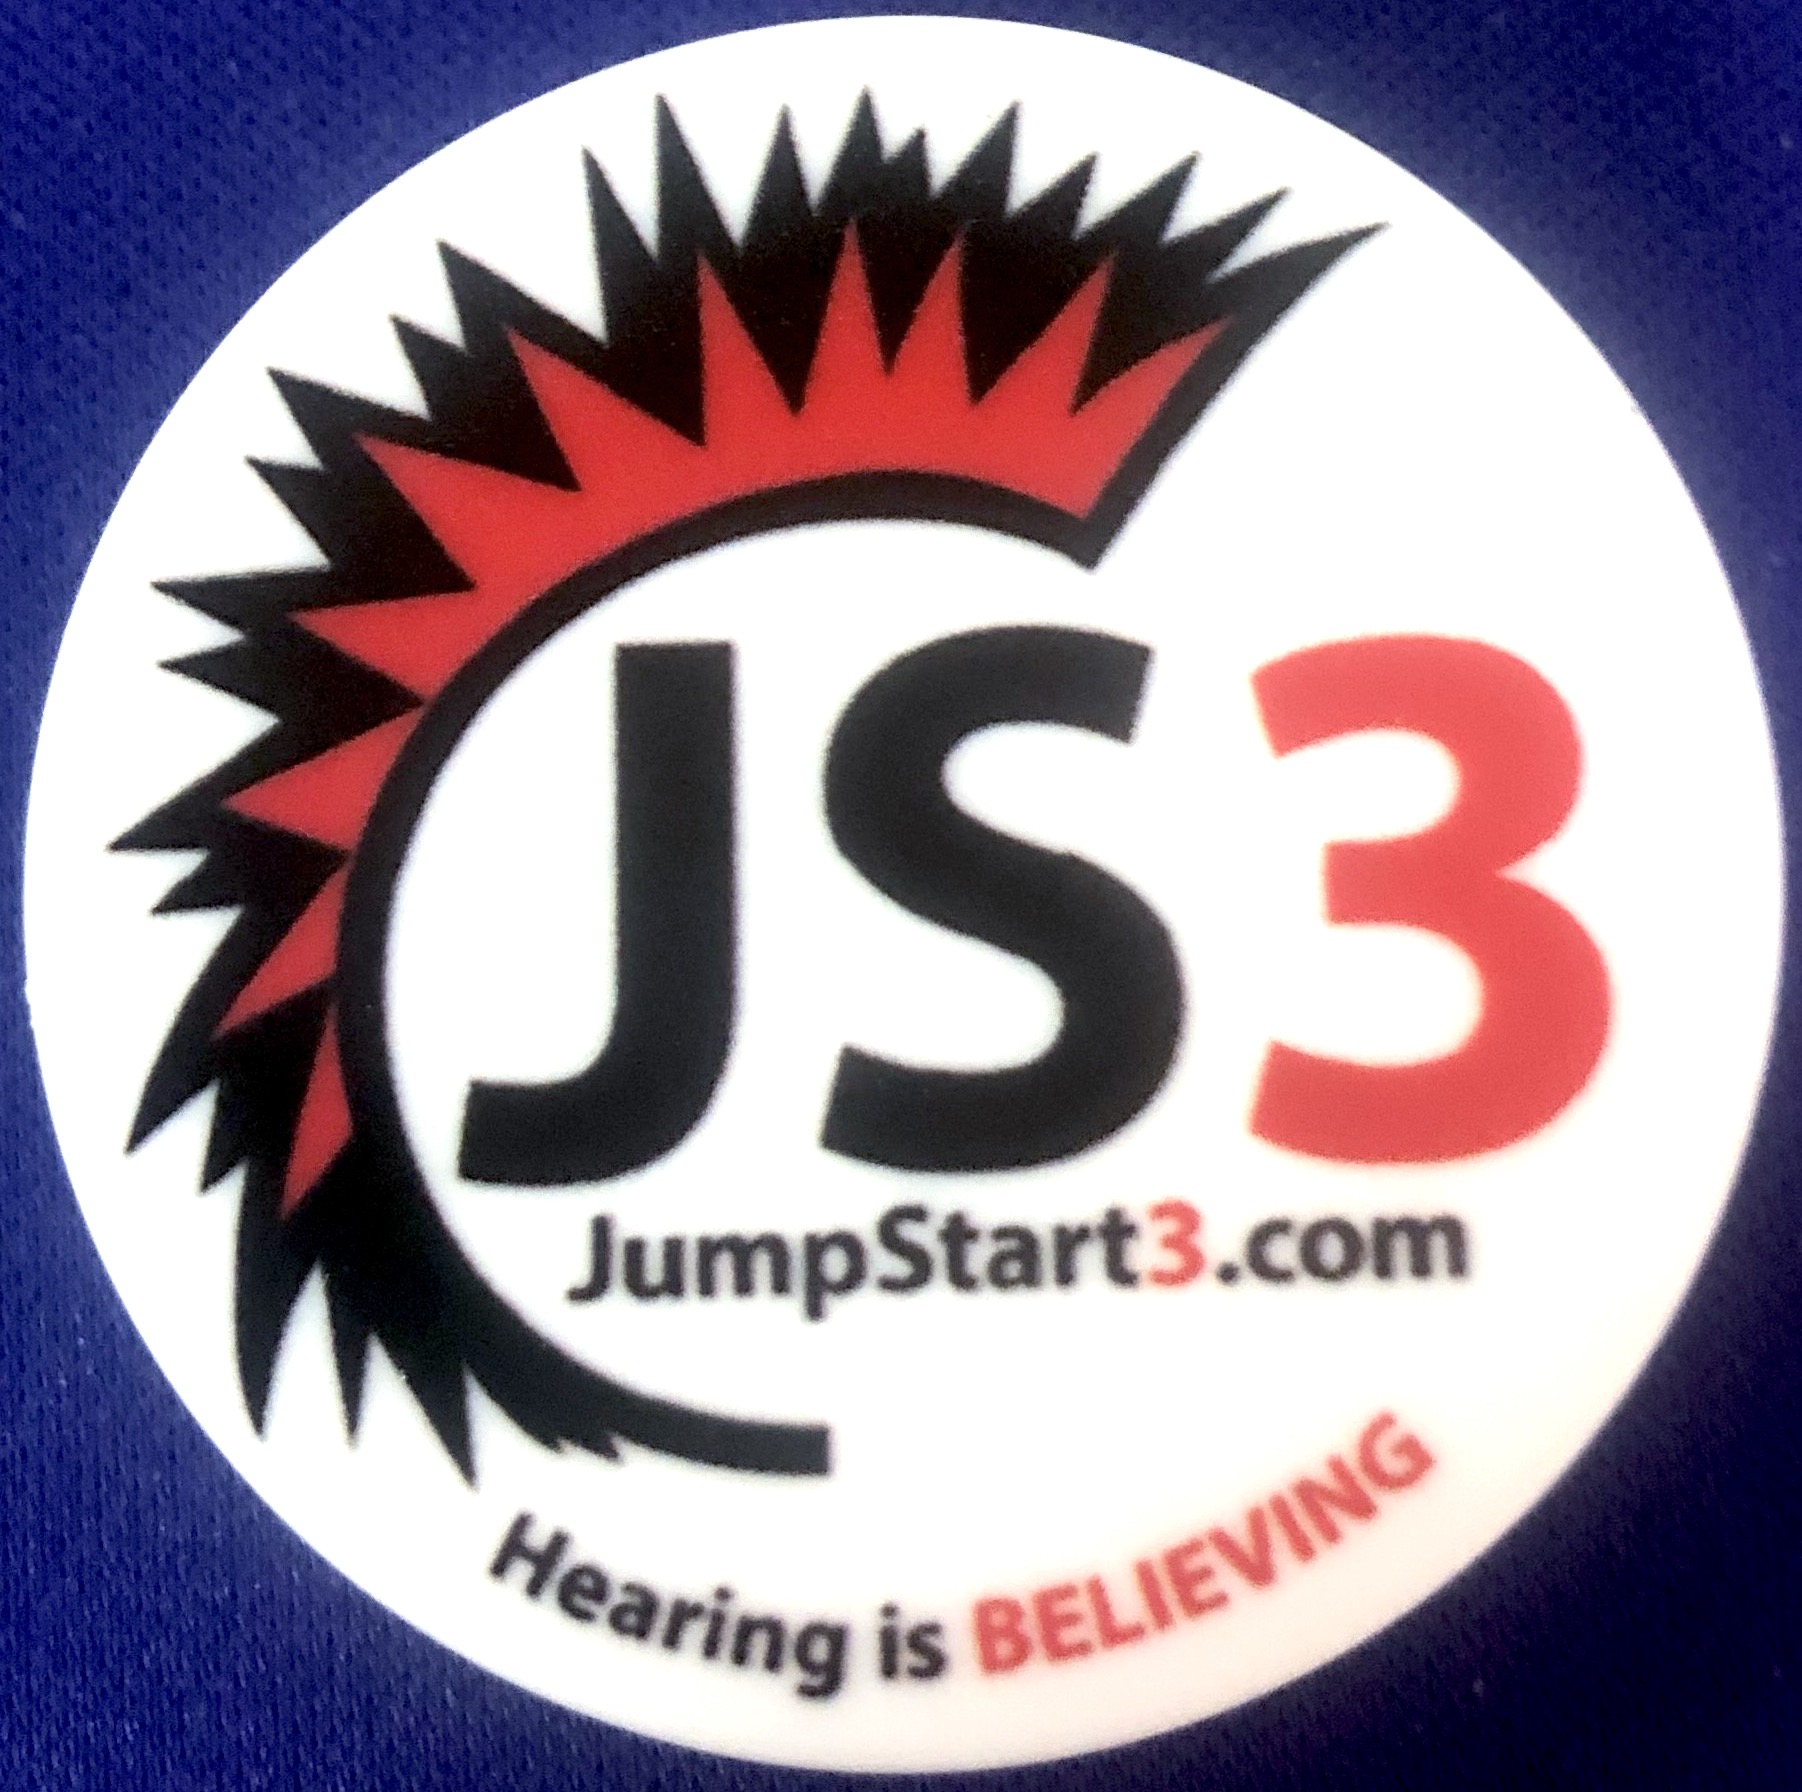 (c) Jumpstart3.com